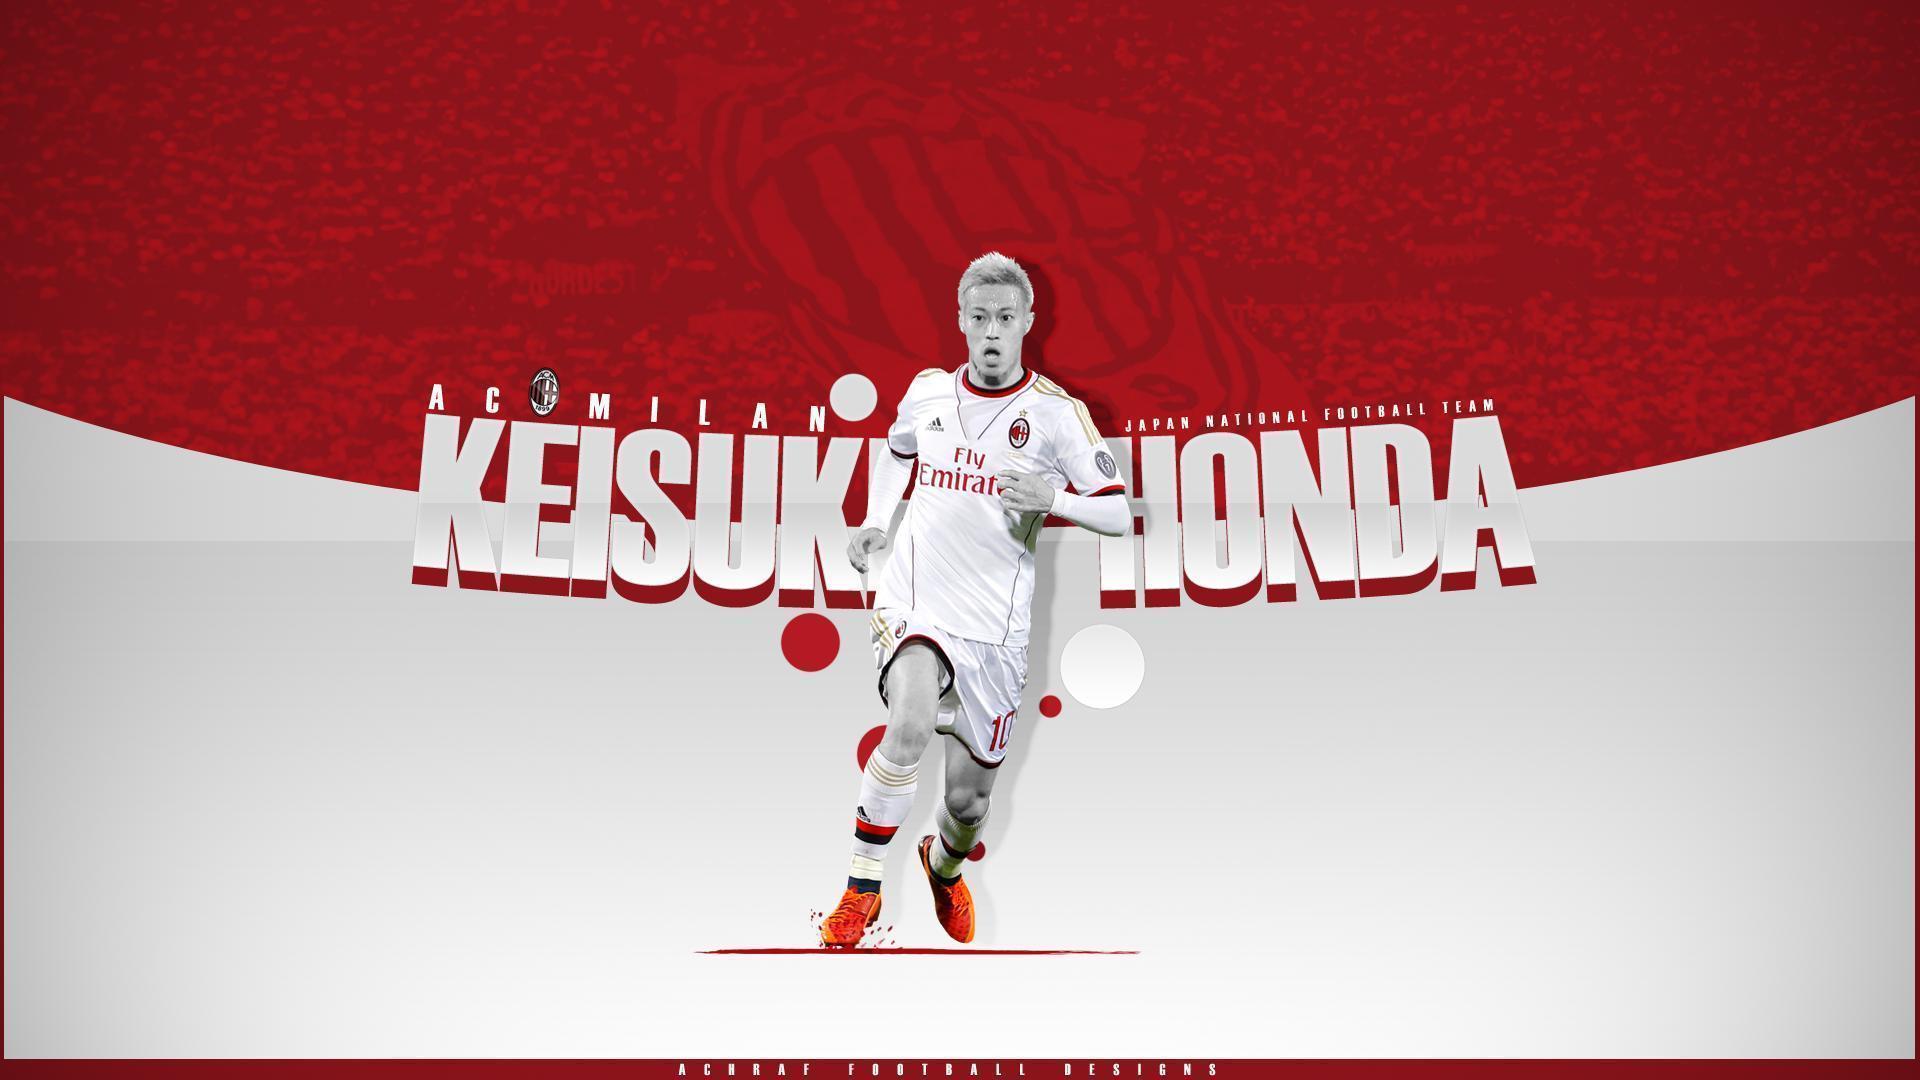 Keisuke Honda AC Milan HD Wallpaper 2014. Football Wallpaper